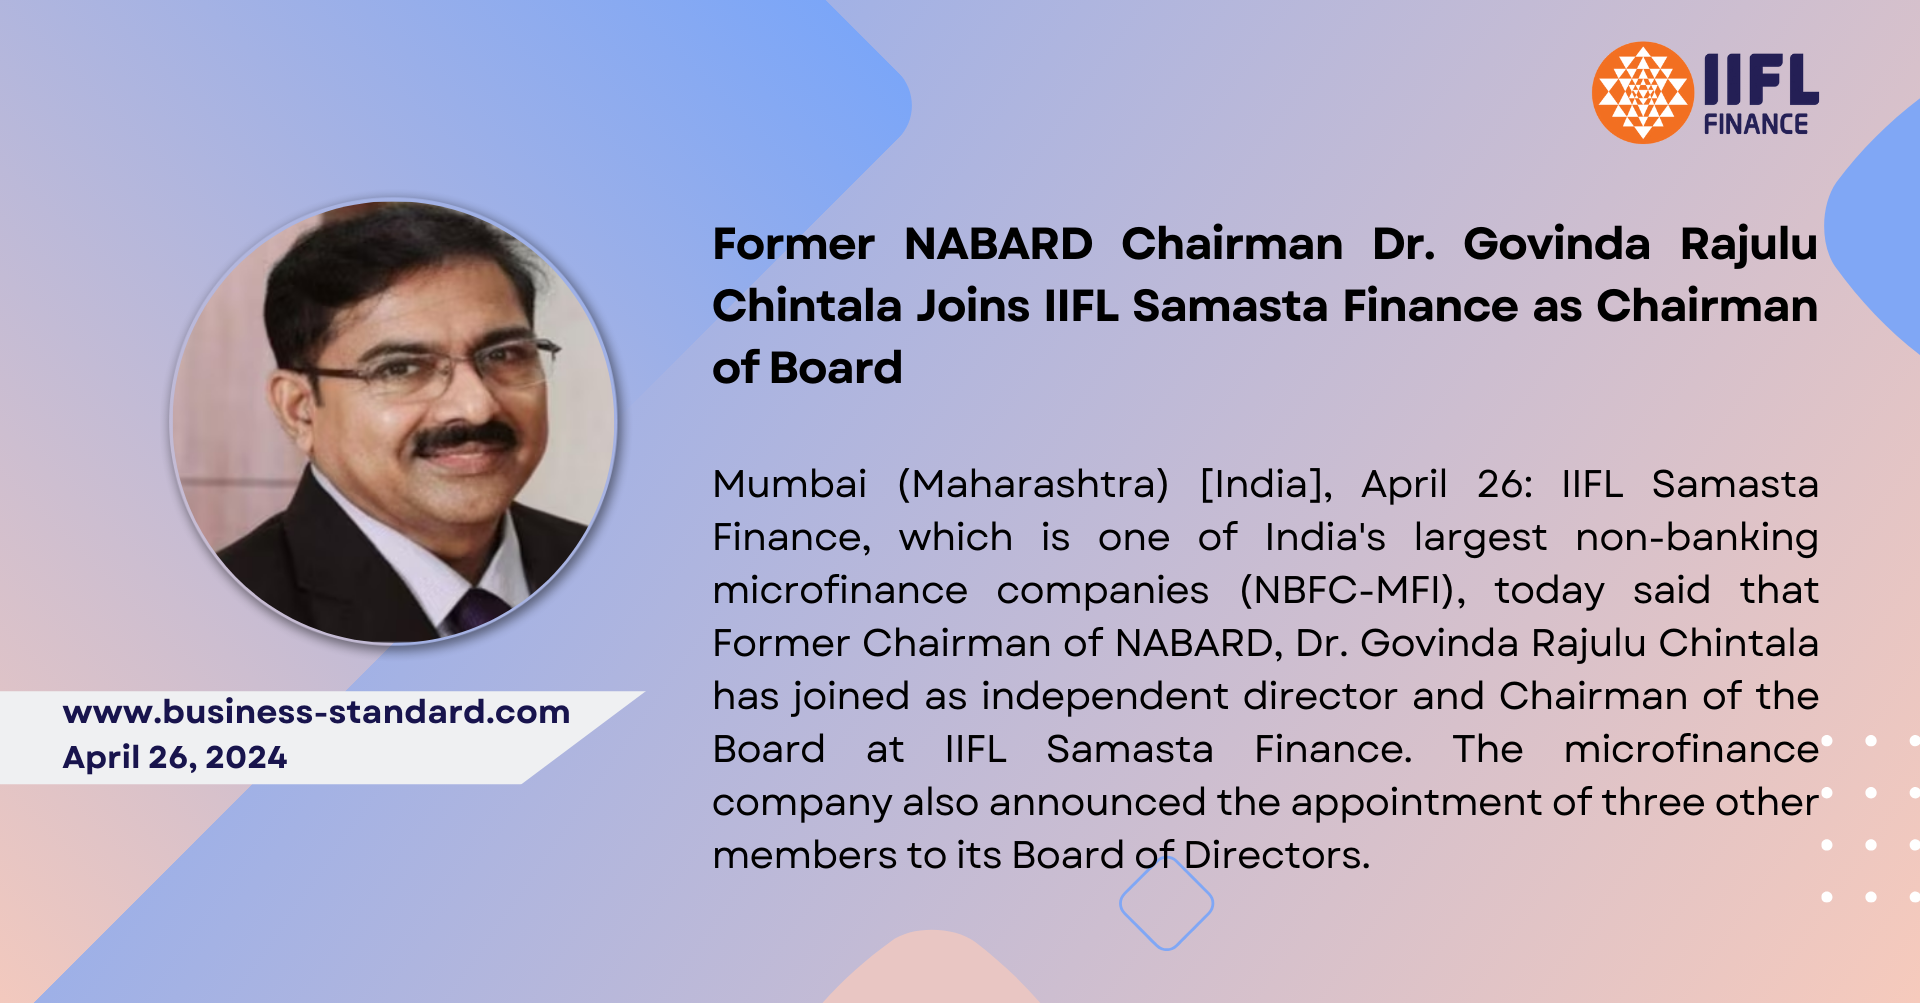 Former NABARD Chairman Dr. Govinda Rajulu Chintala Joins IIFL Samasta Finance as Chairman of Board